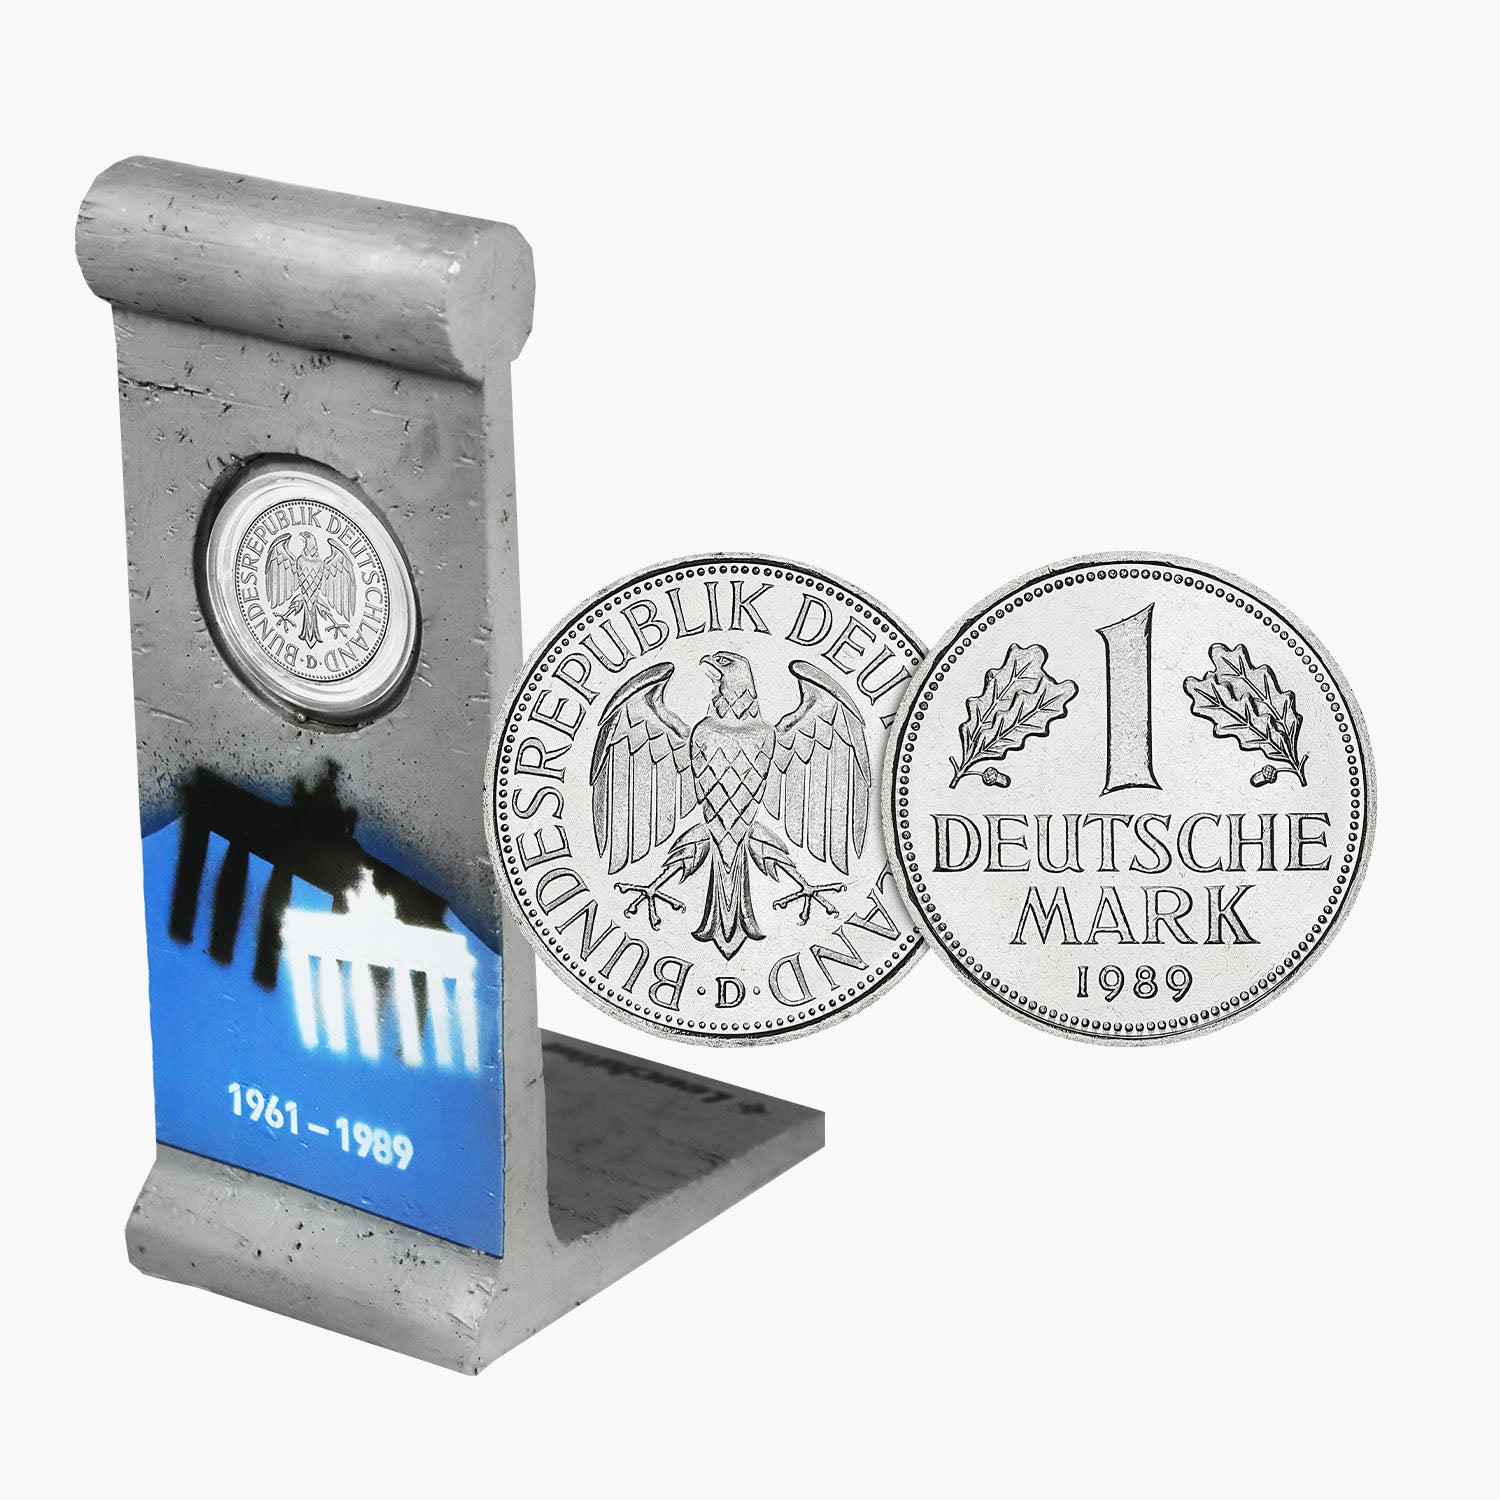 1989 1 Deutsche Mark coin in Berlin Wall section